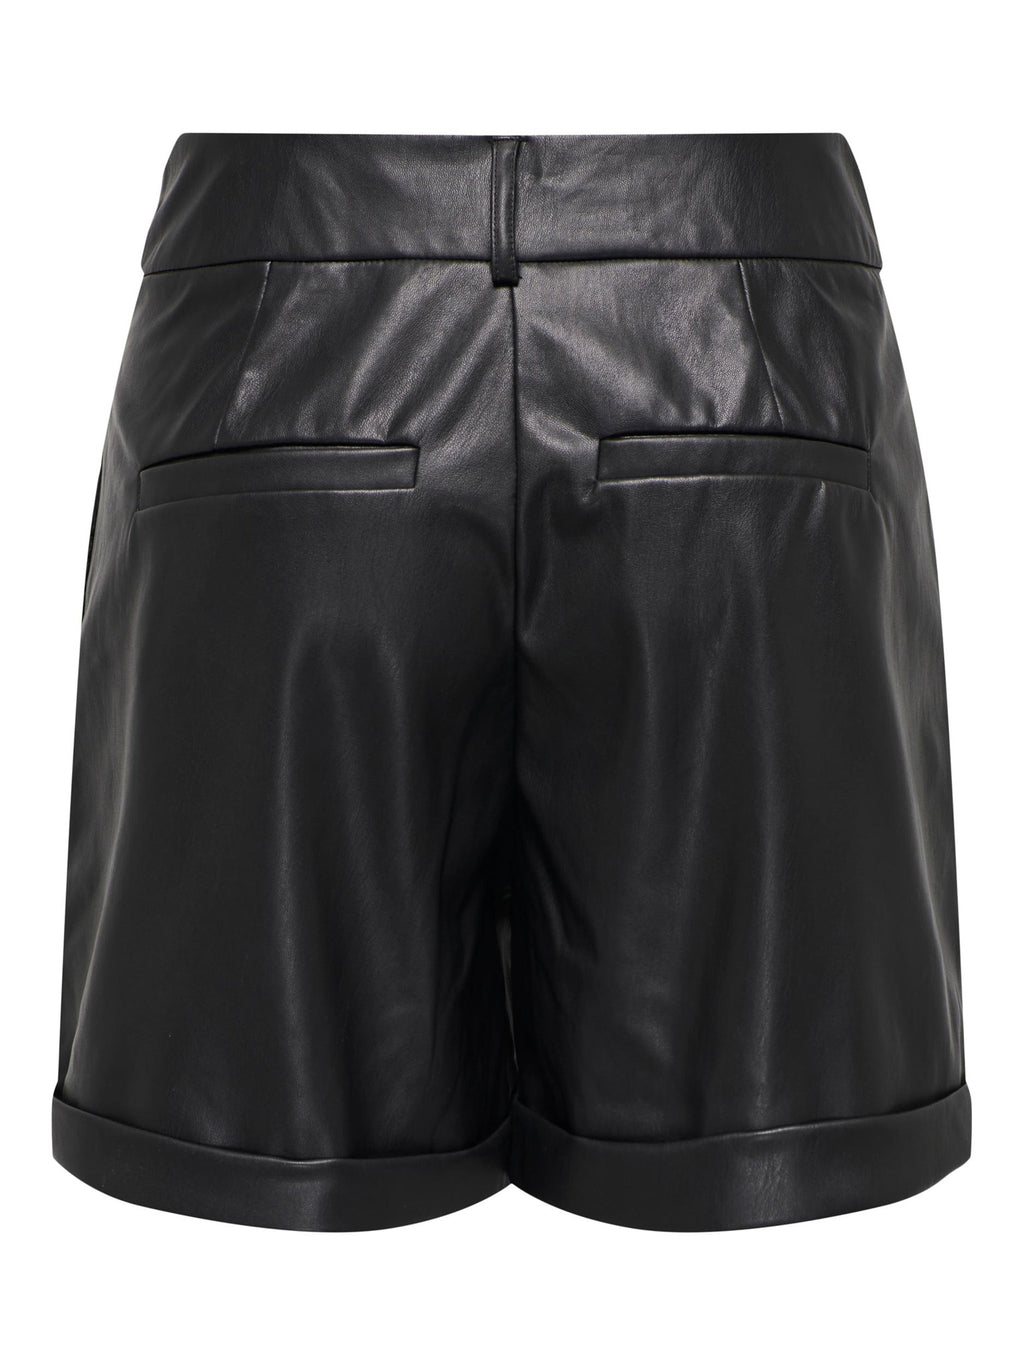 Emy Faux Leather Shorts - Black